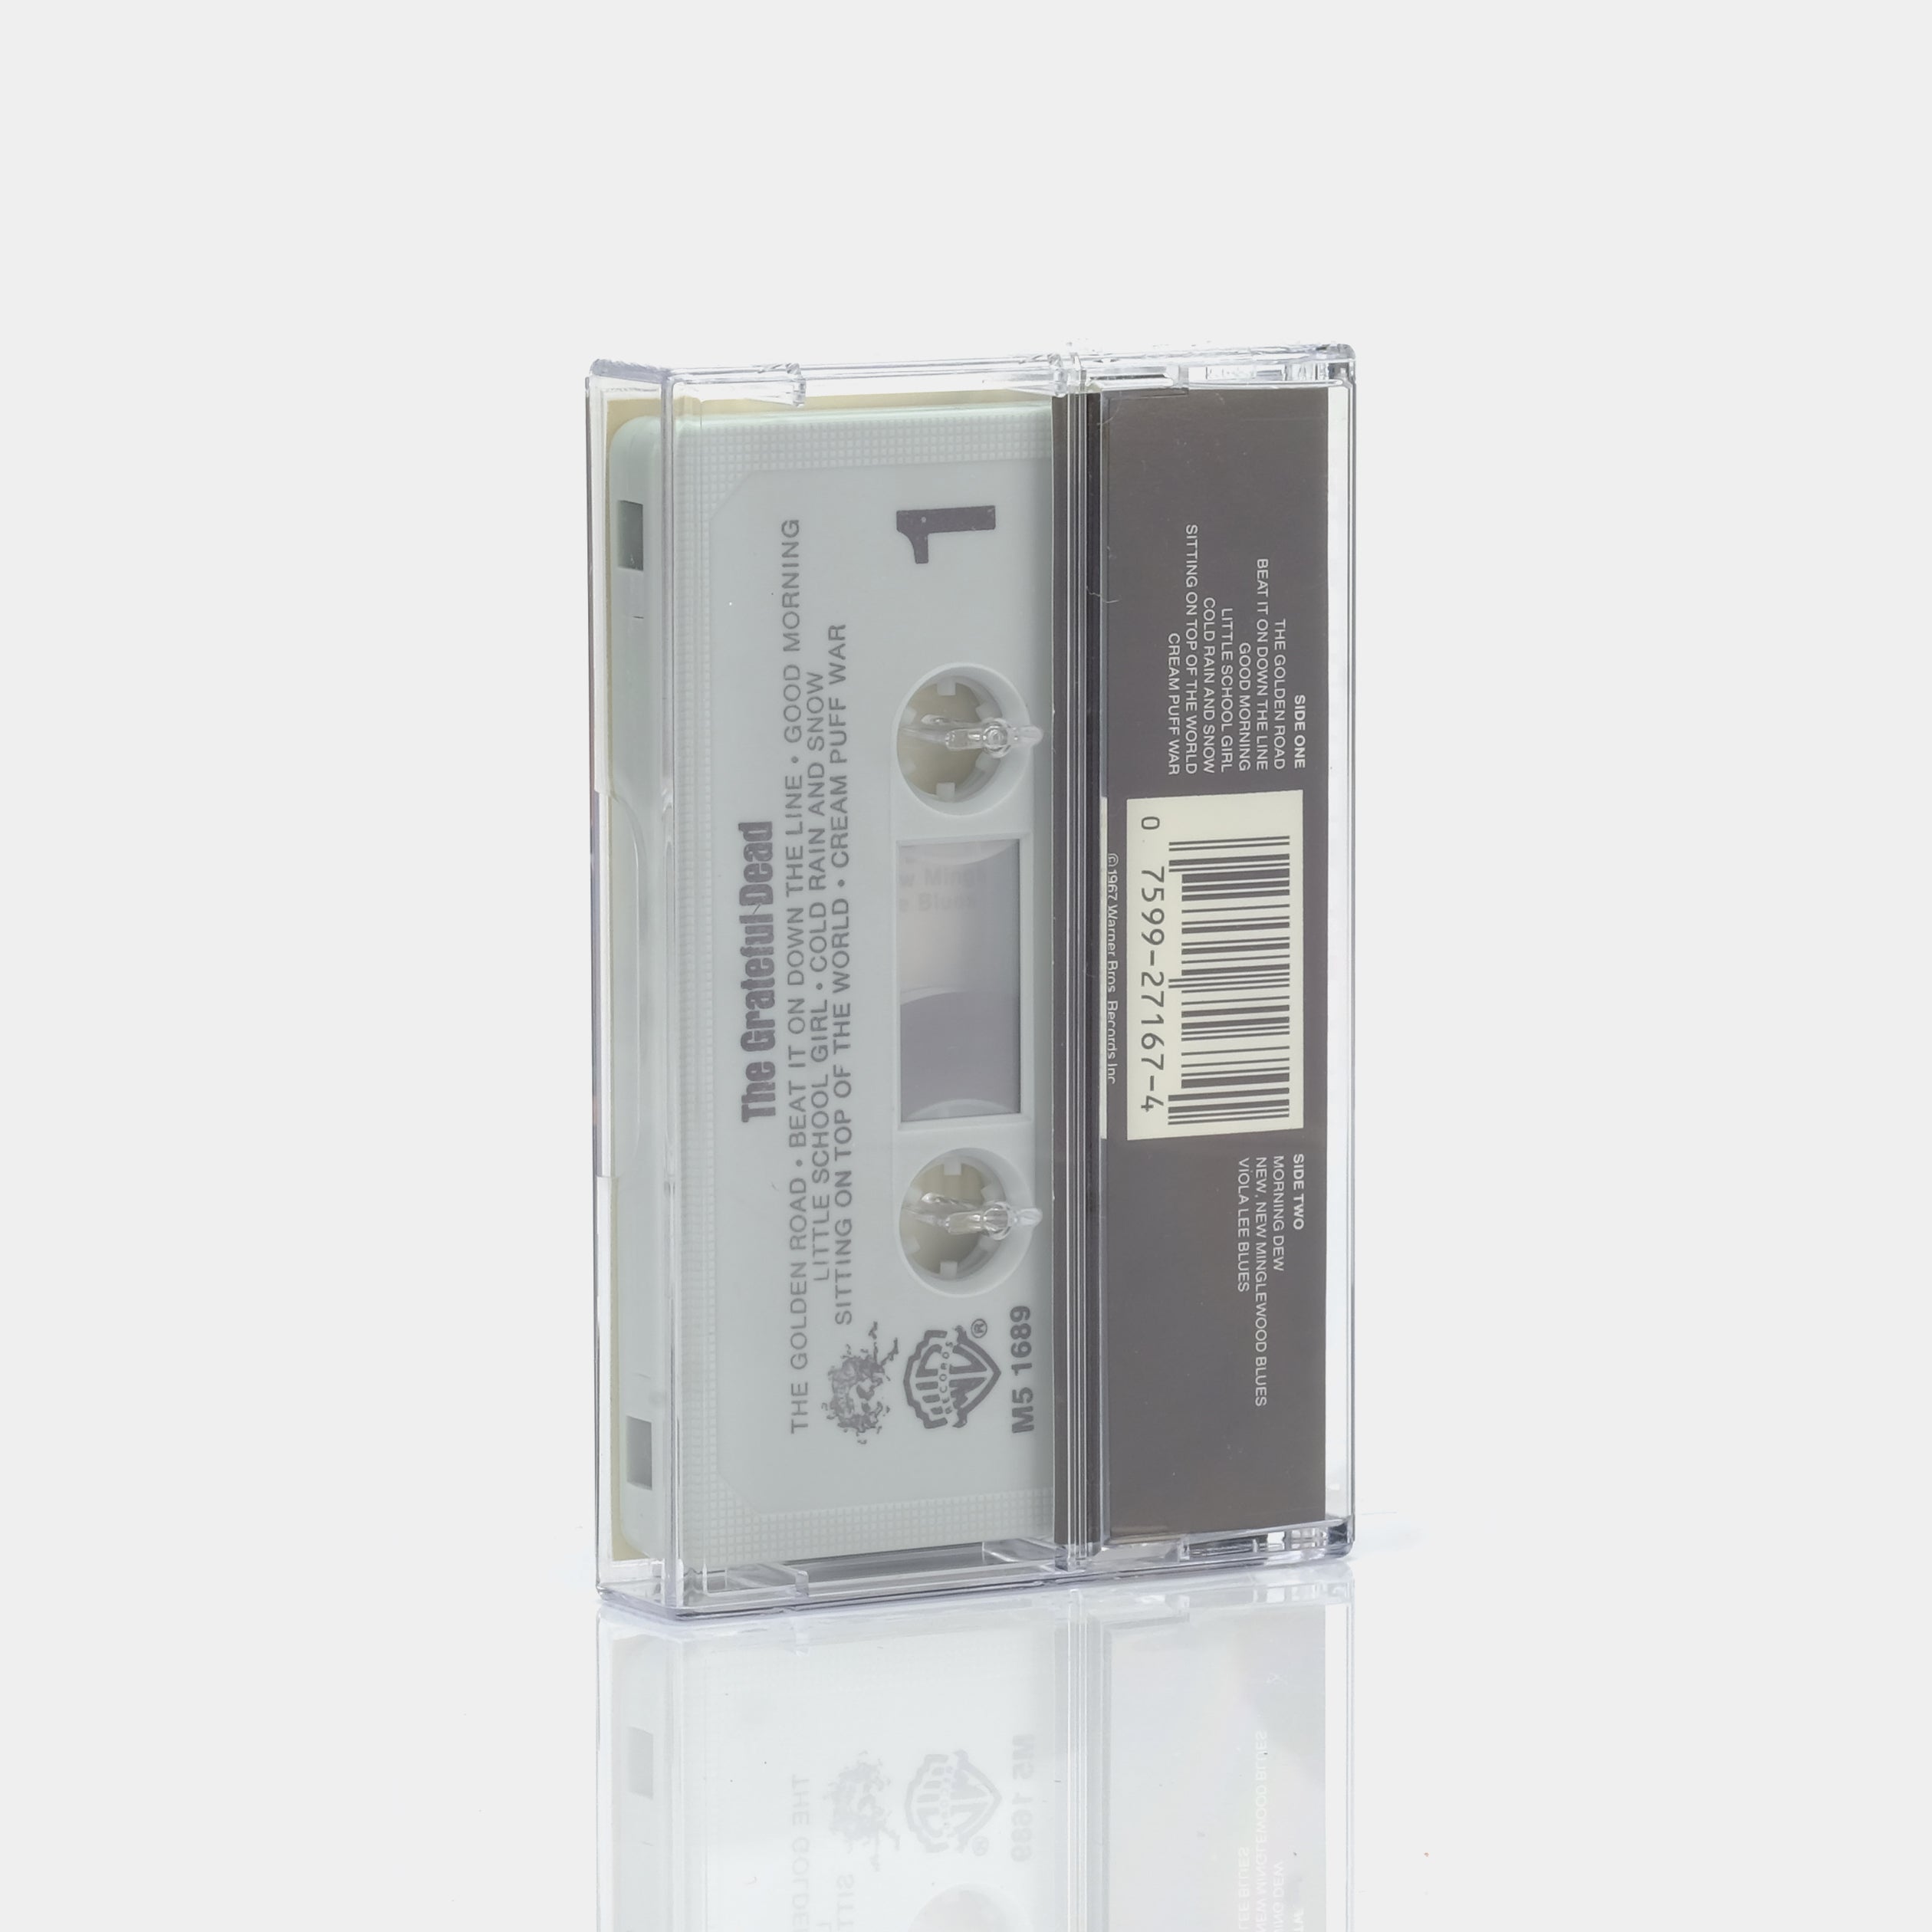 The Grateful Dead - The Grateful Dead Cassette Tape